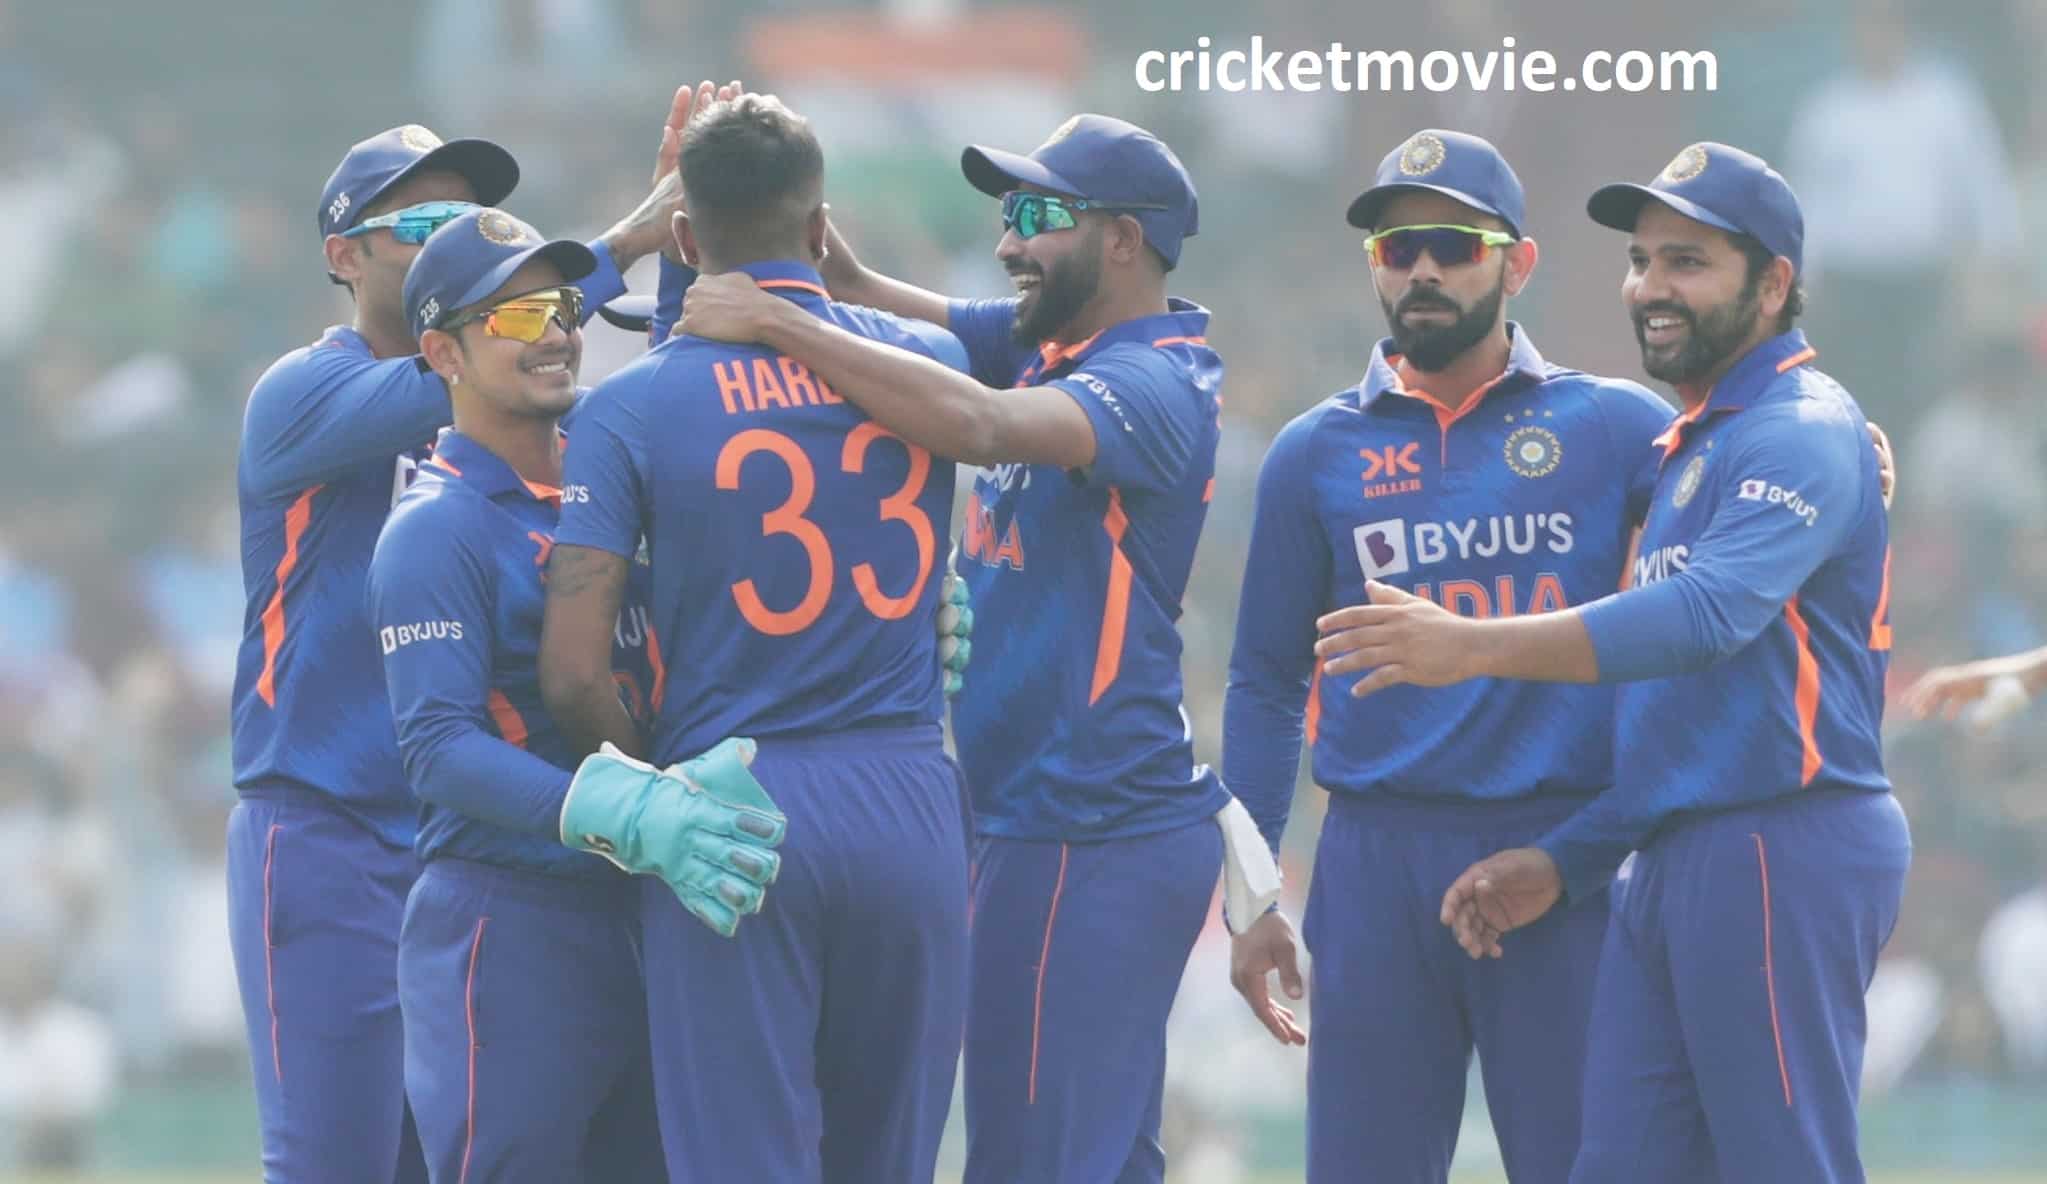 Team India won 2nd ODI against New Zealand-cricketmovie.com